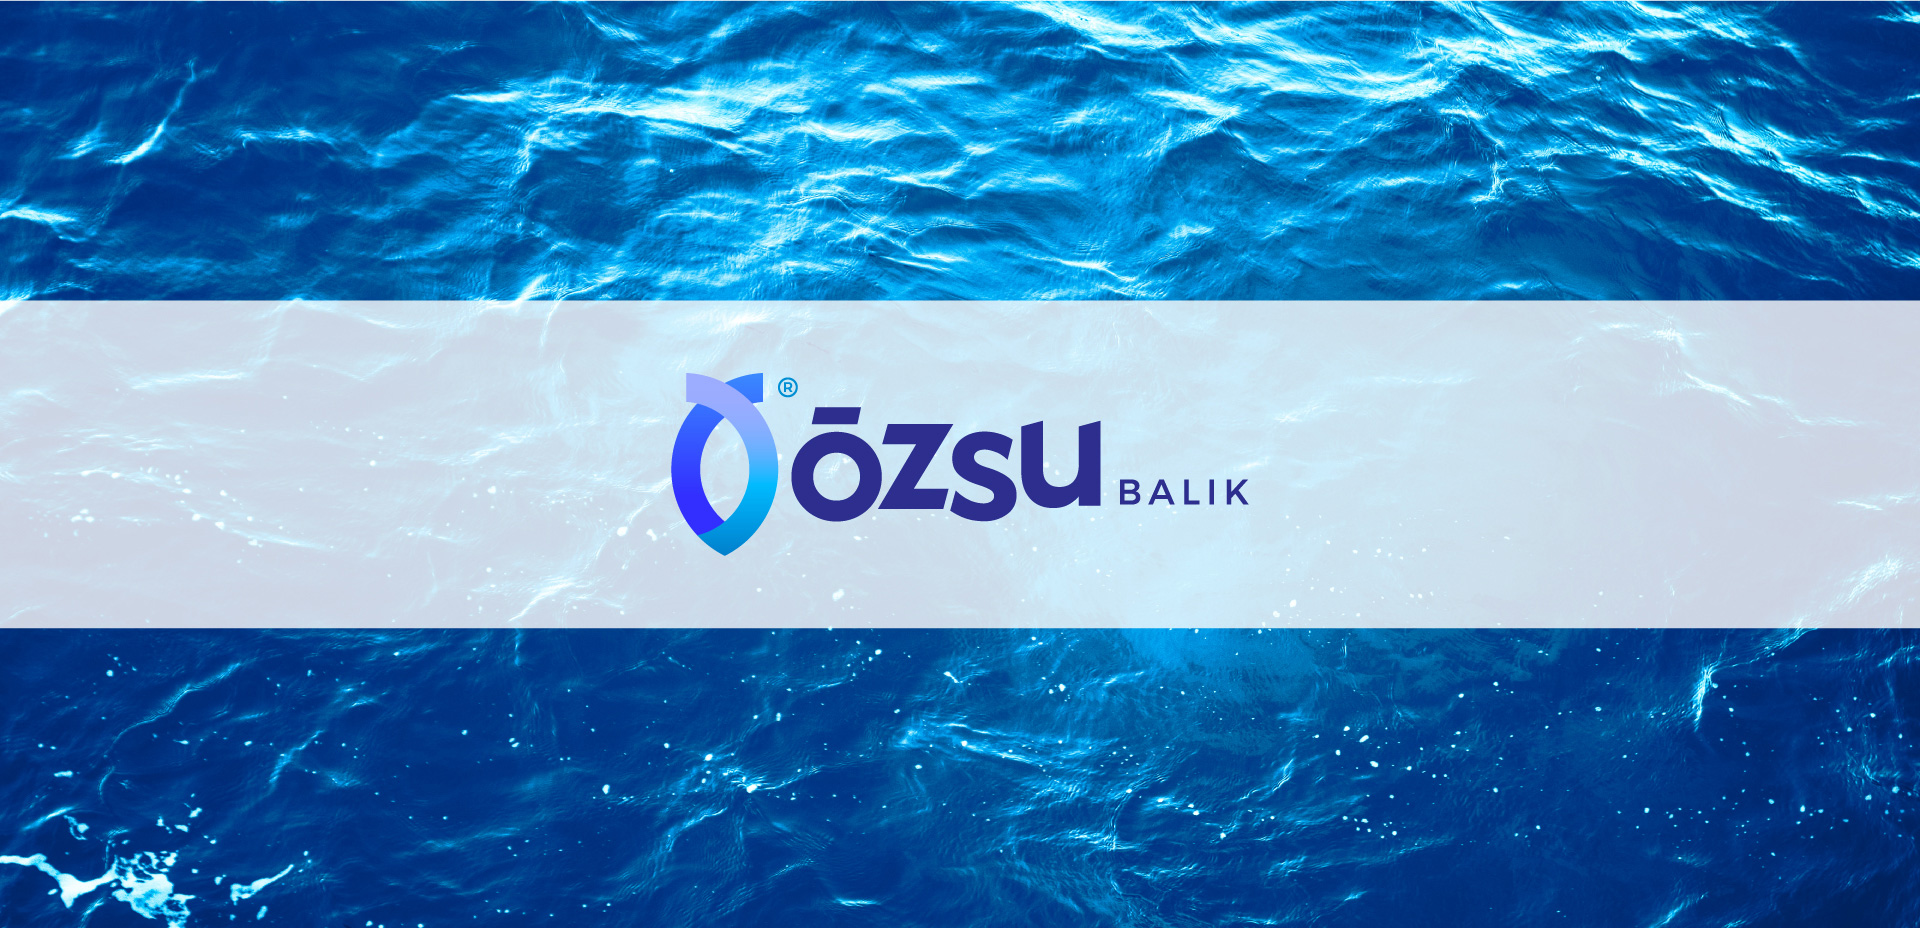 Özsu Fish - KONSEPTIZ Advertising Agency in Turkey